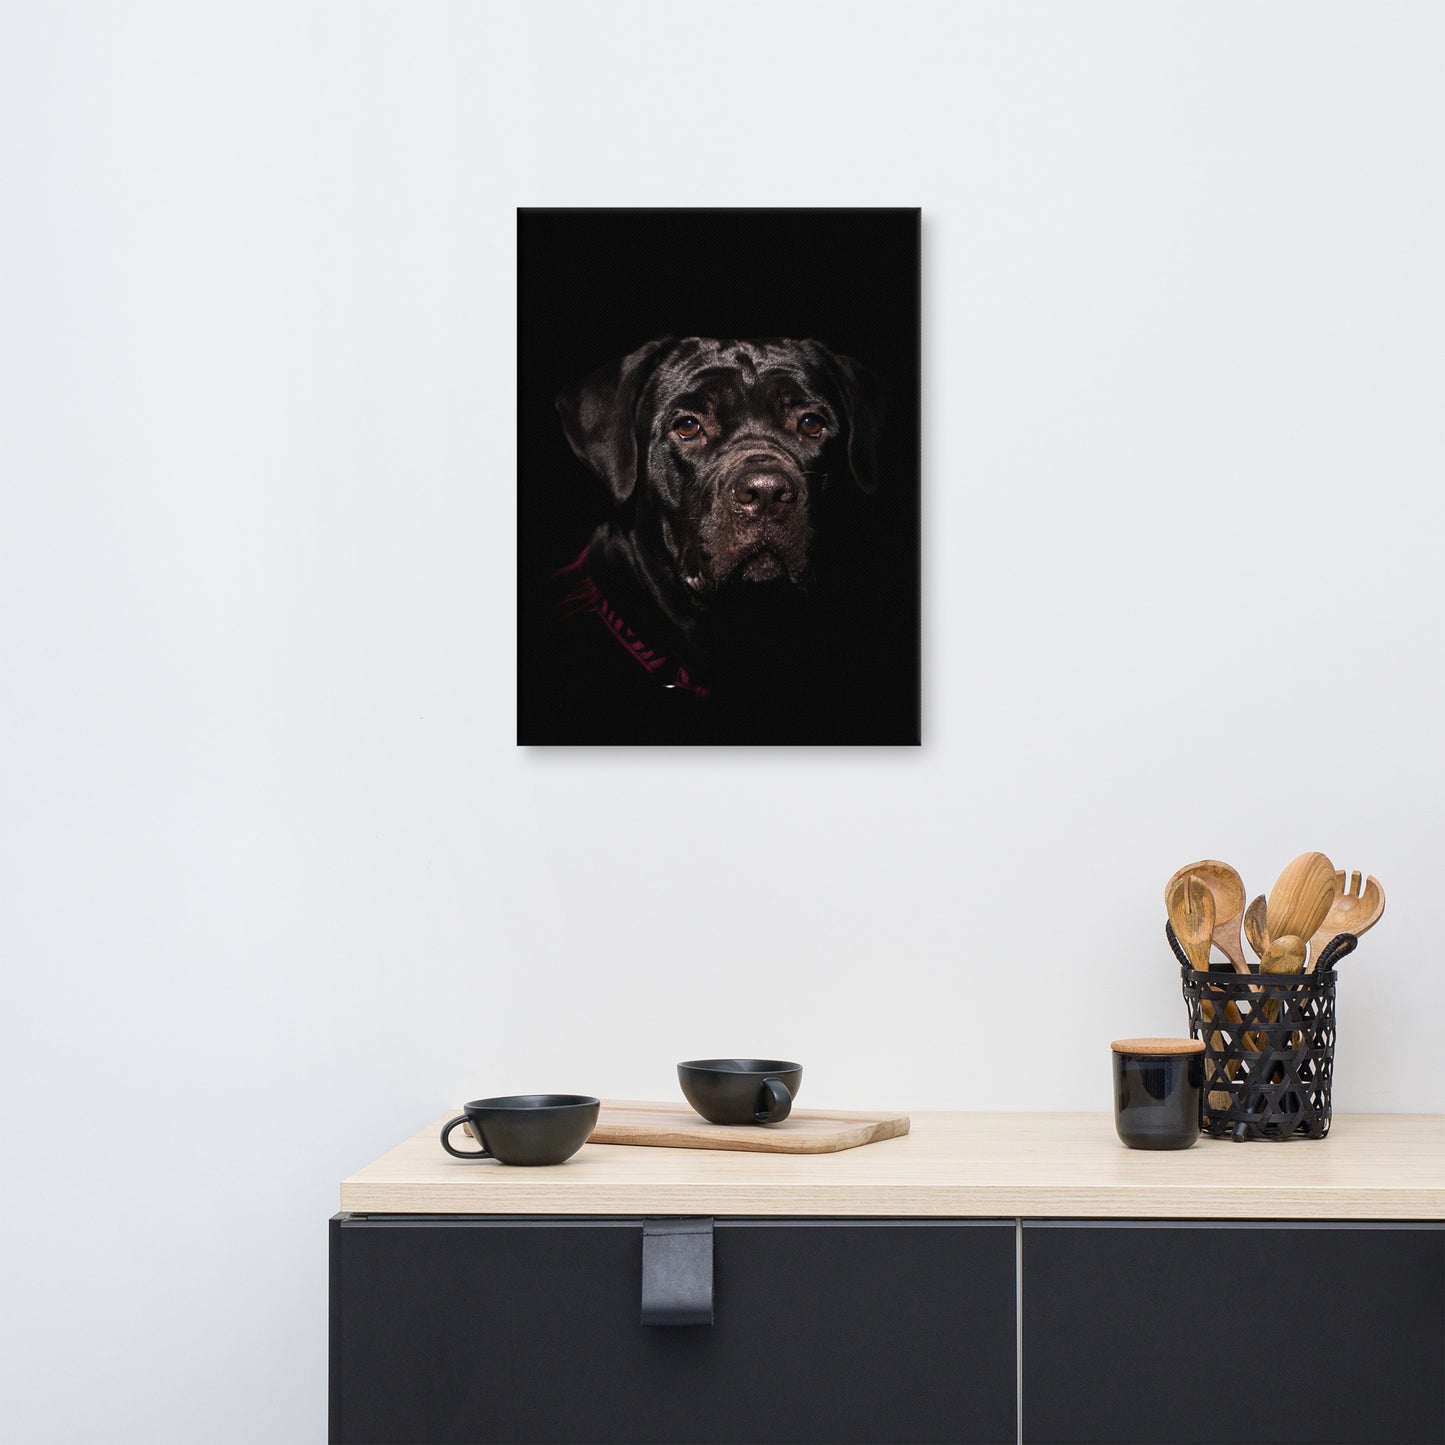 Cane Corso Puppy Low Key Portrait Animal / Dog Photograph Canvas Wall Art Prints